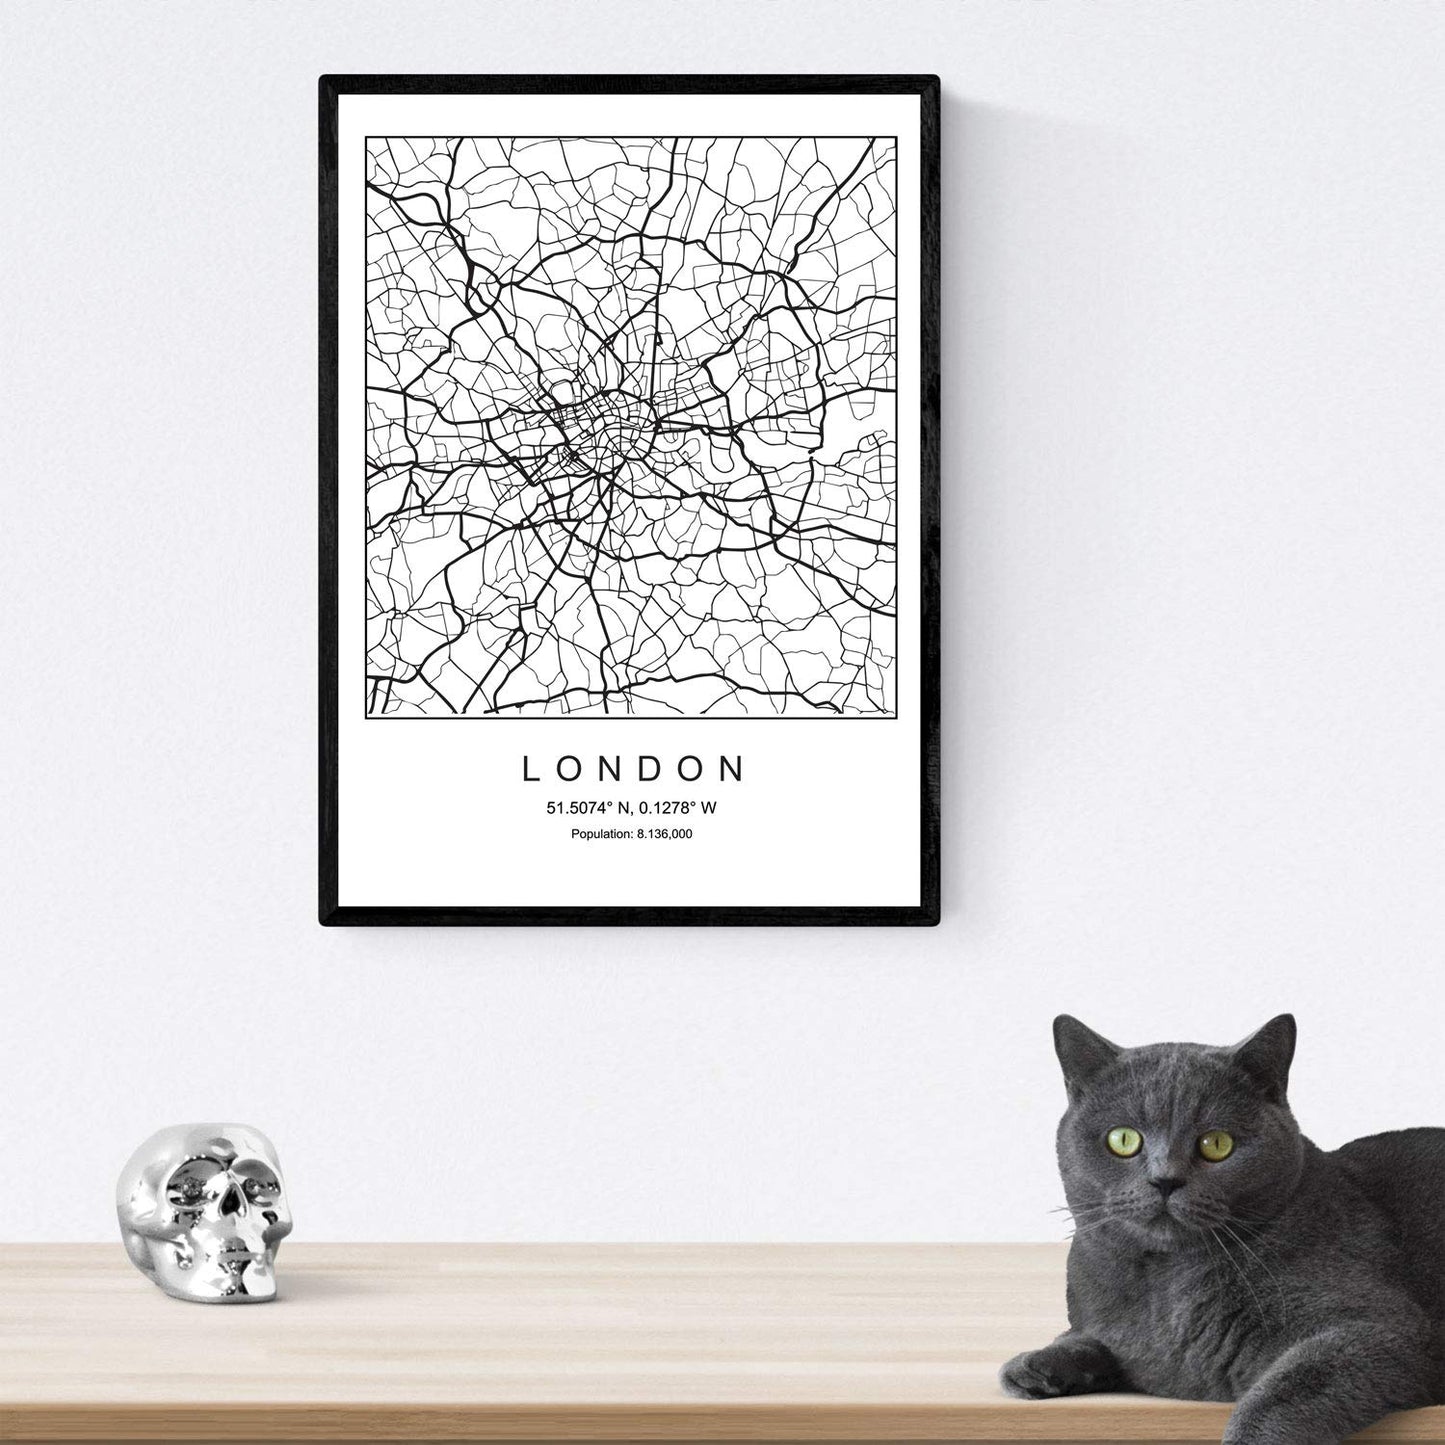 Pack de posters de Londres - Big Ben. Láminas con monumentos de ciudades.-Artwork-Nacnic-Nacnic Estudio SL